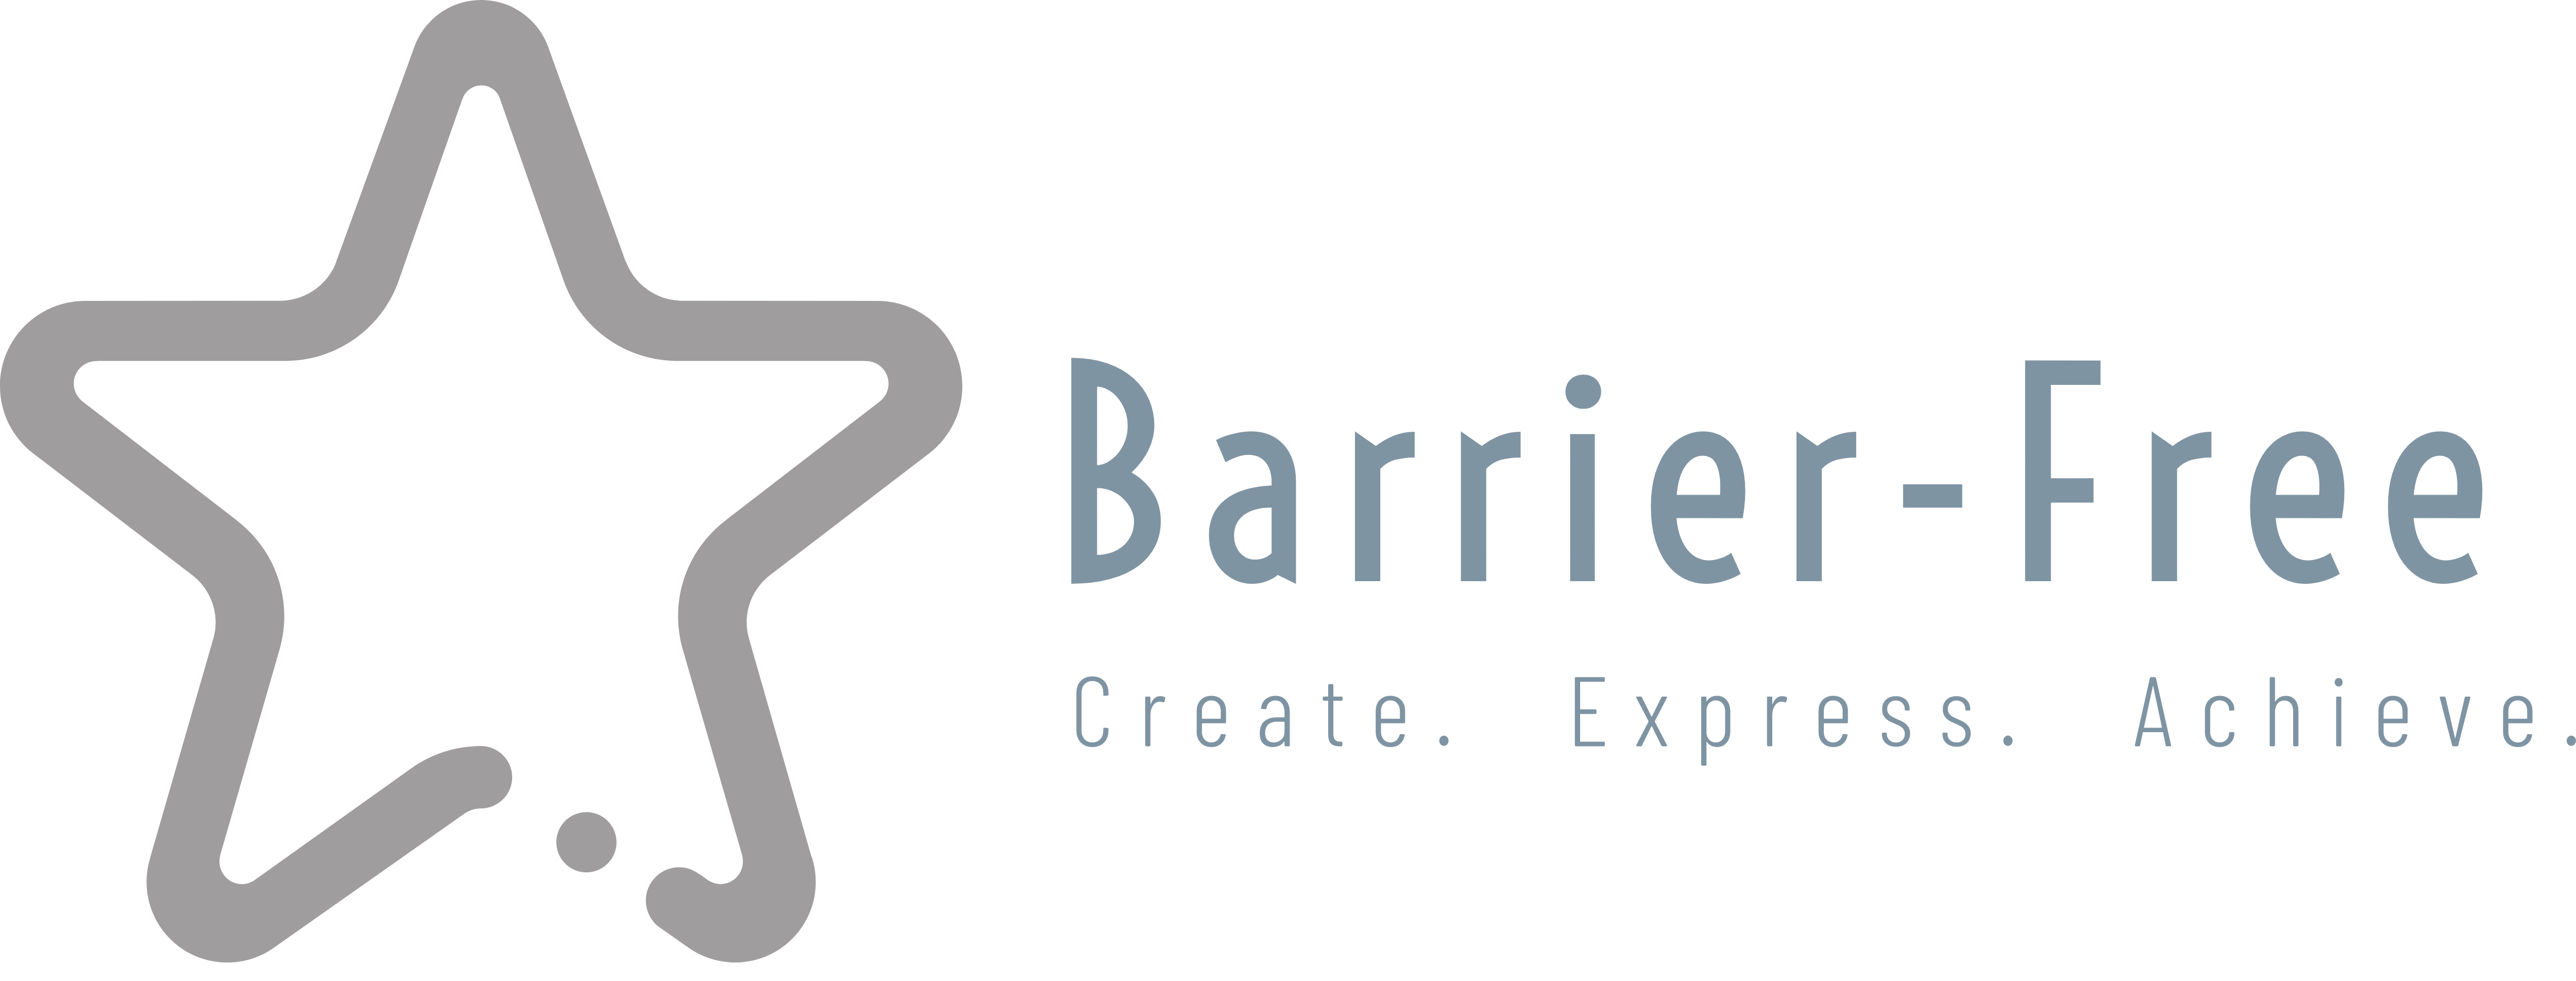 Barrier-Free logo